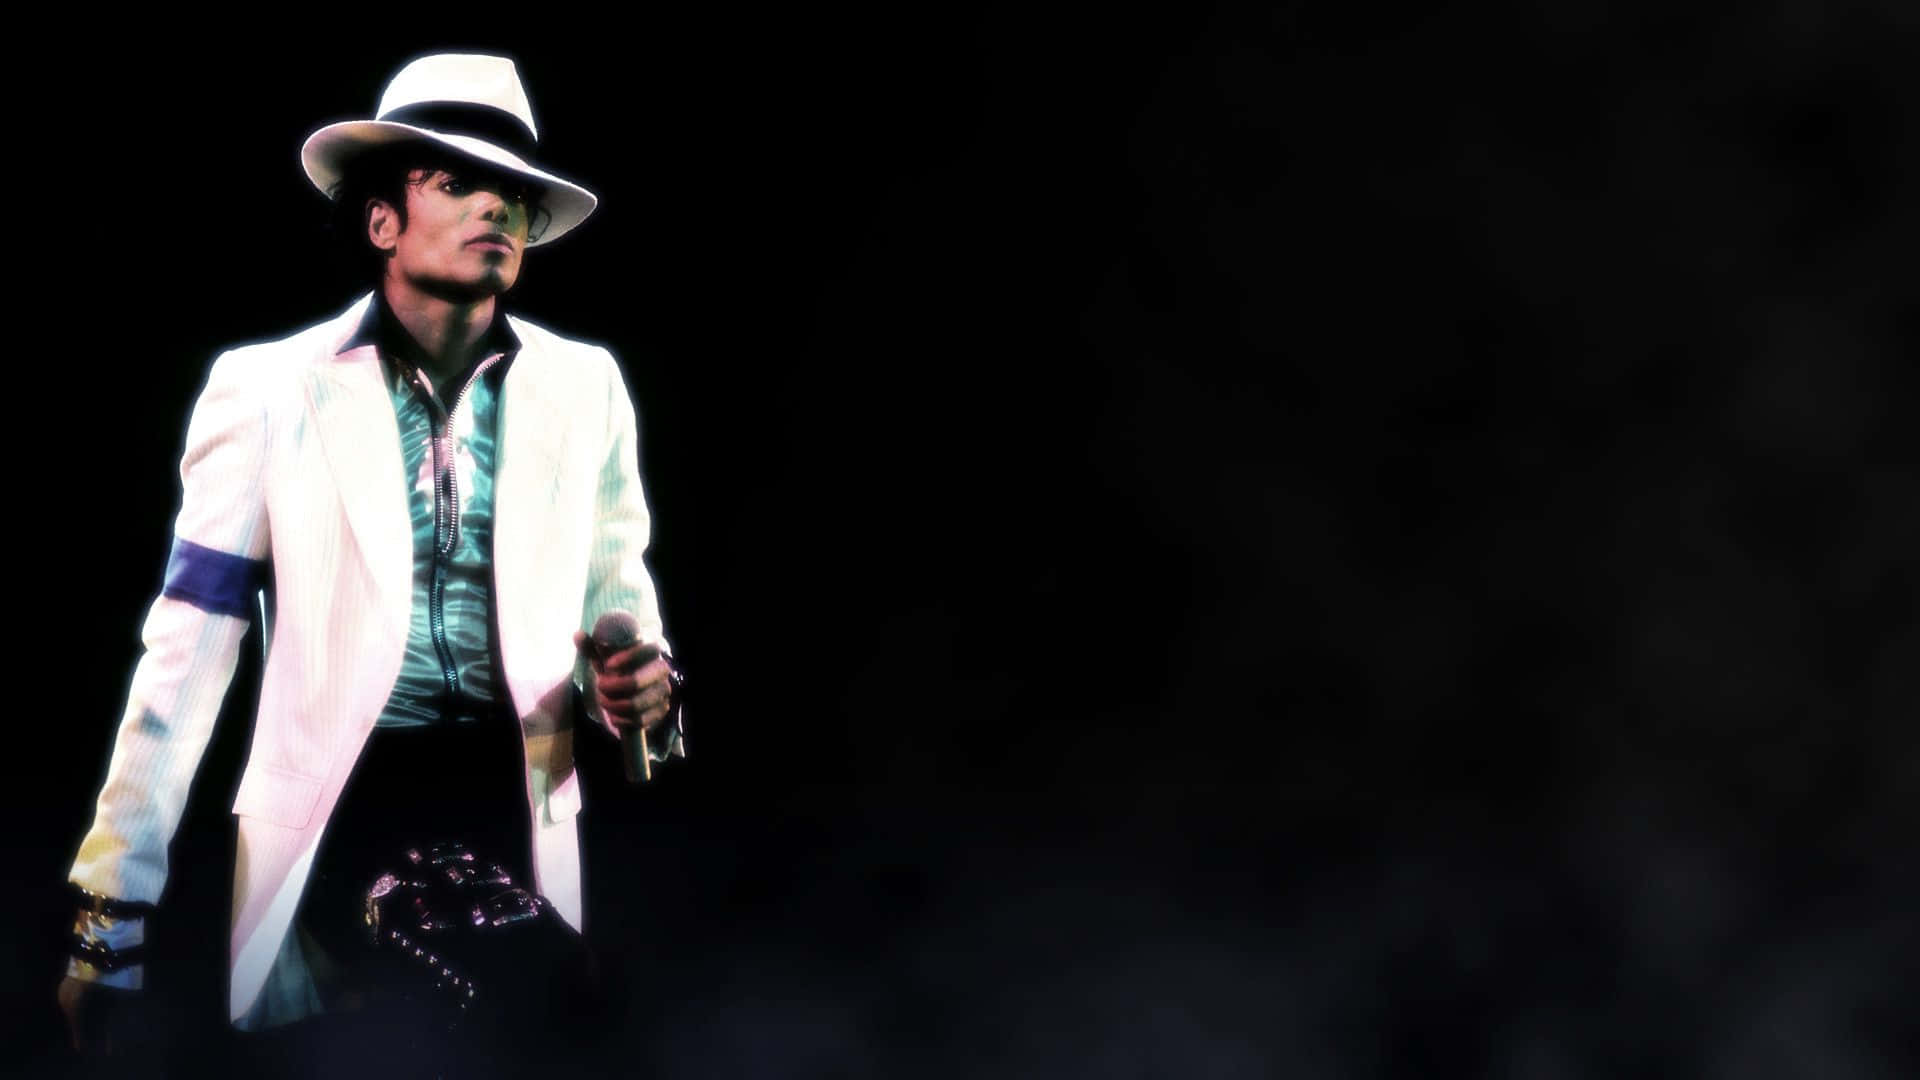 Michael Jackson, King of Pop, in a Striking Pose